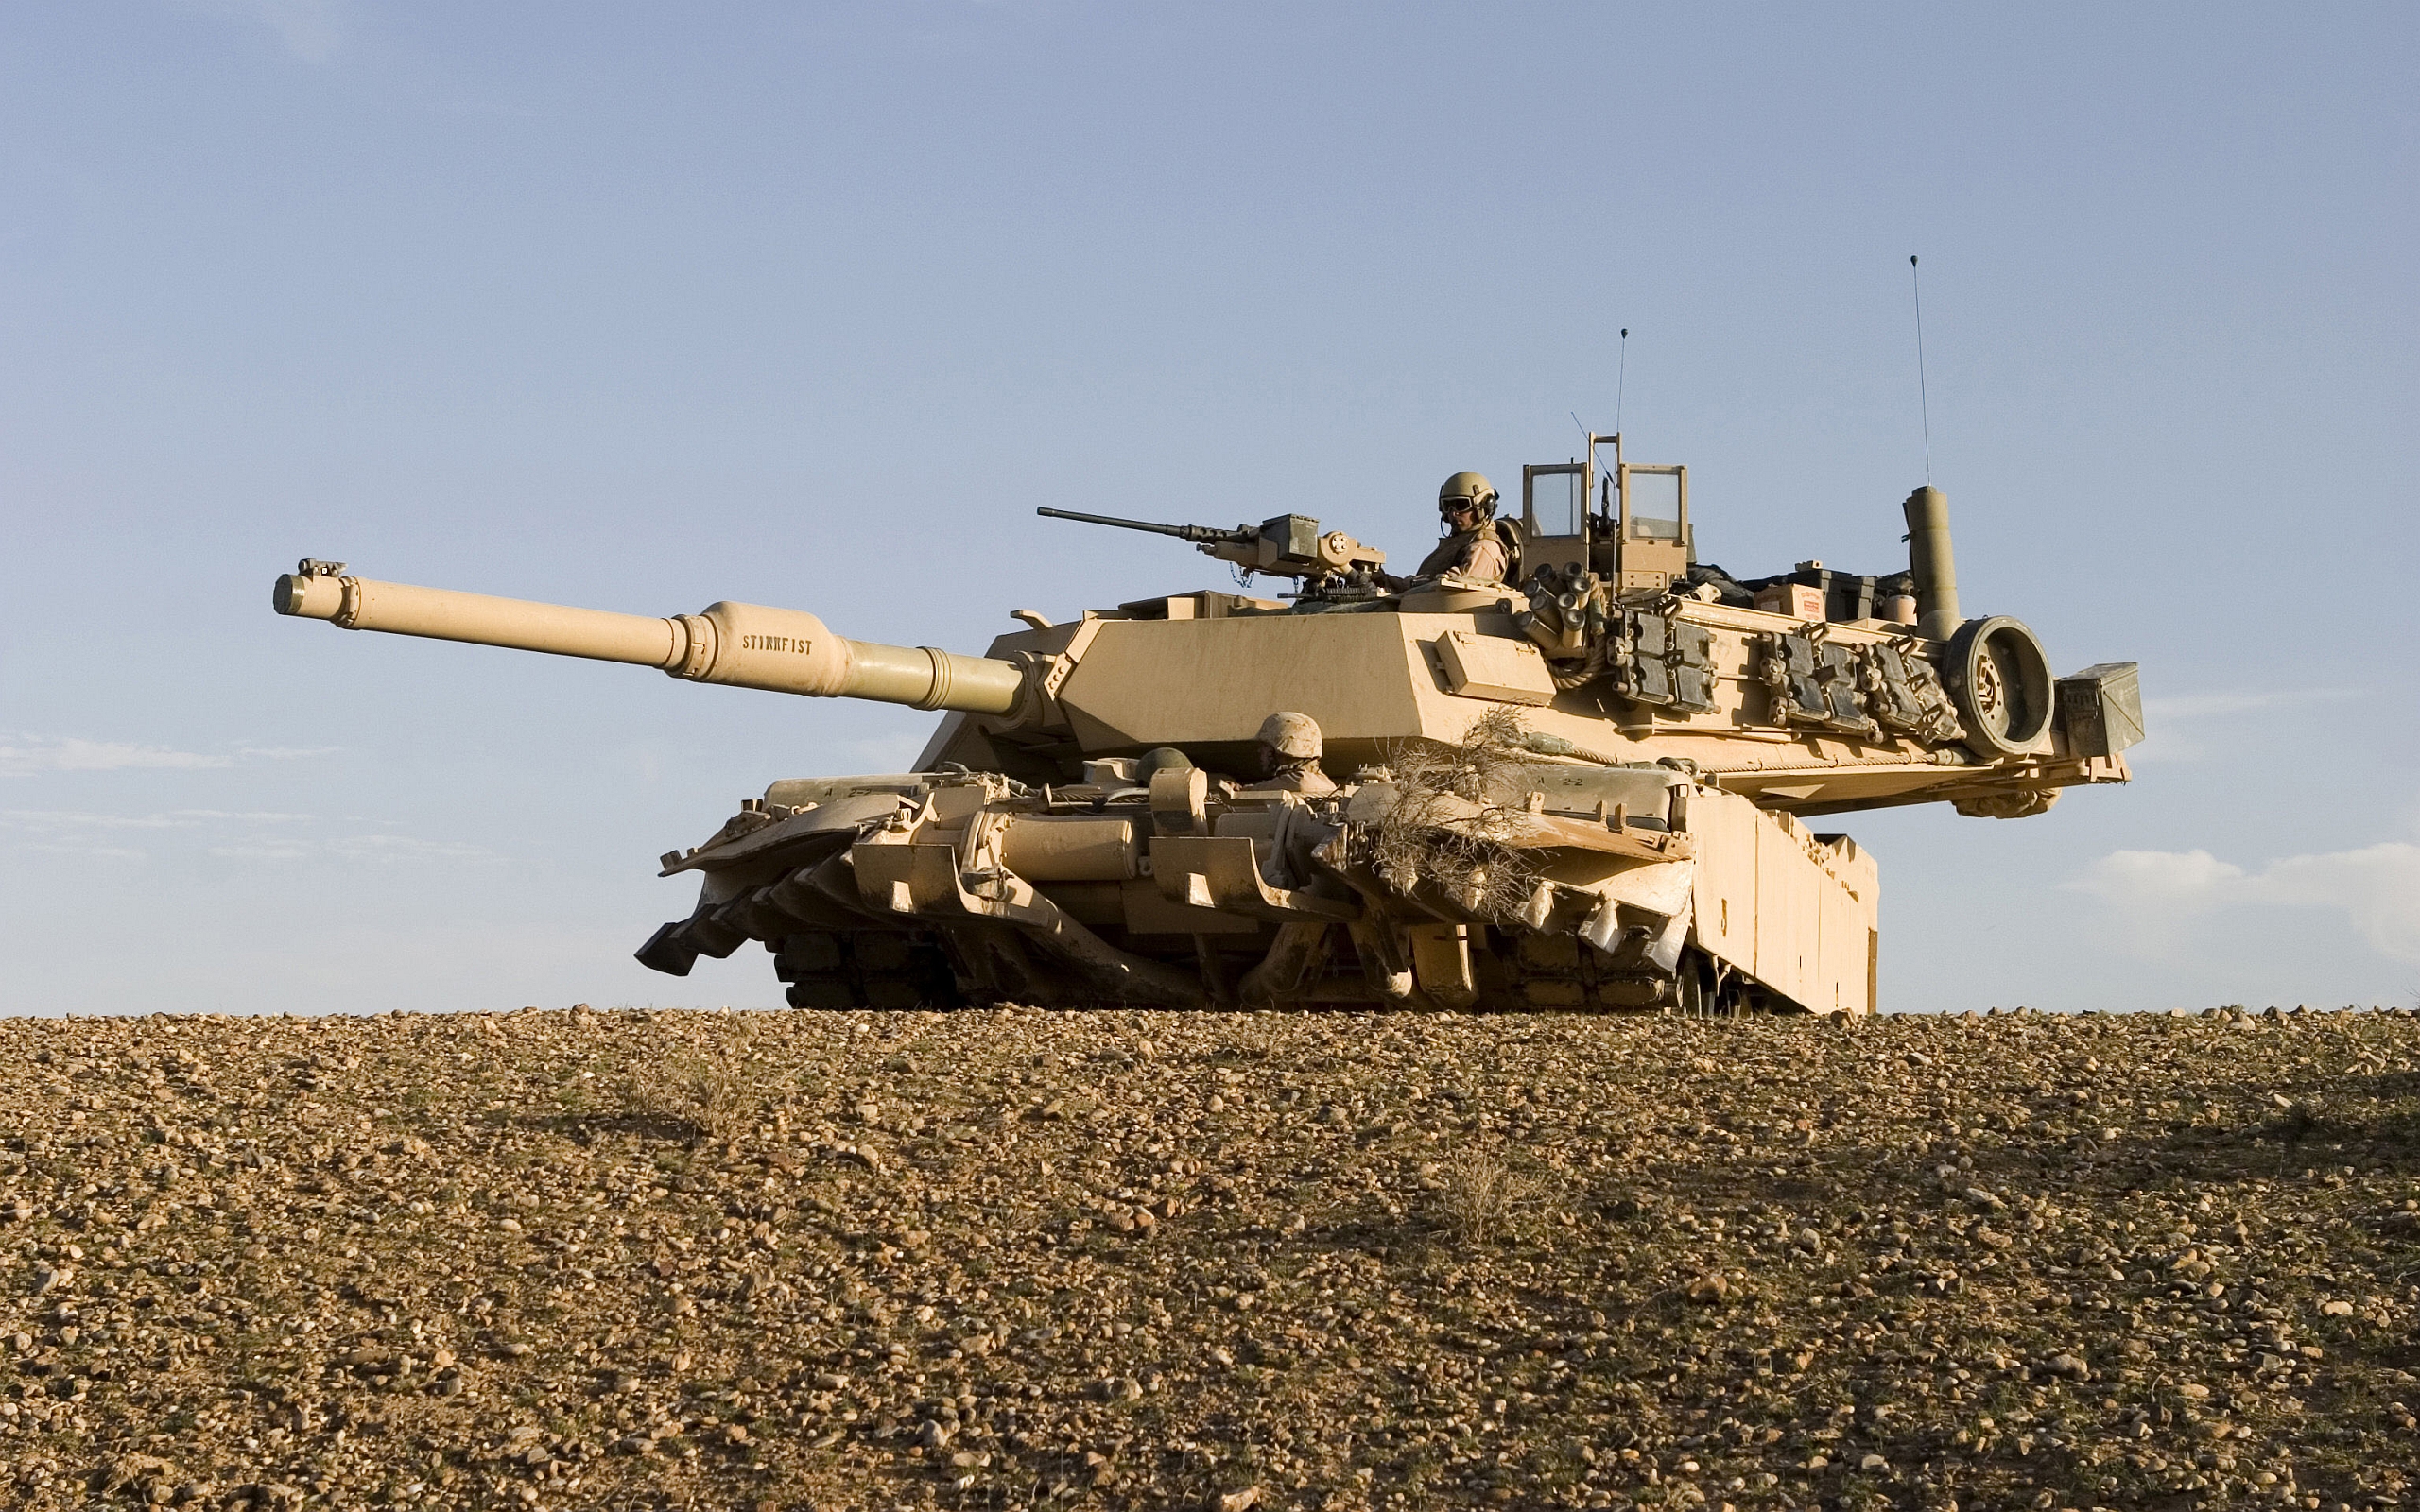 Descarga gratuita de fondo de pantalla para móvil de Tanques, Militar, Tanque.